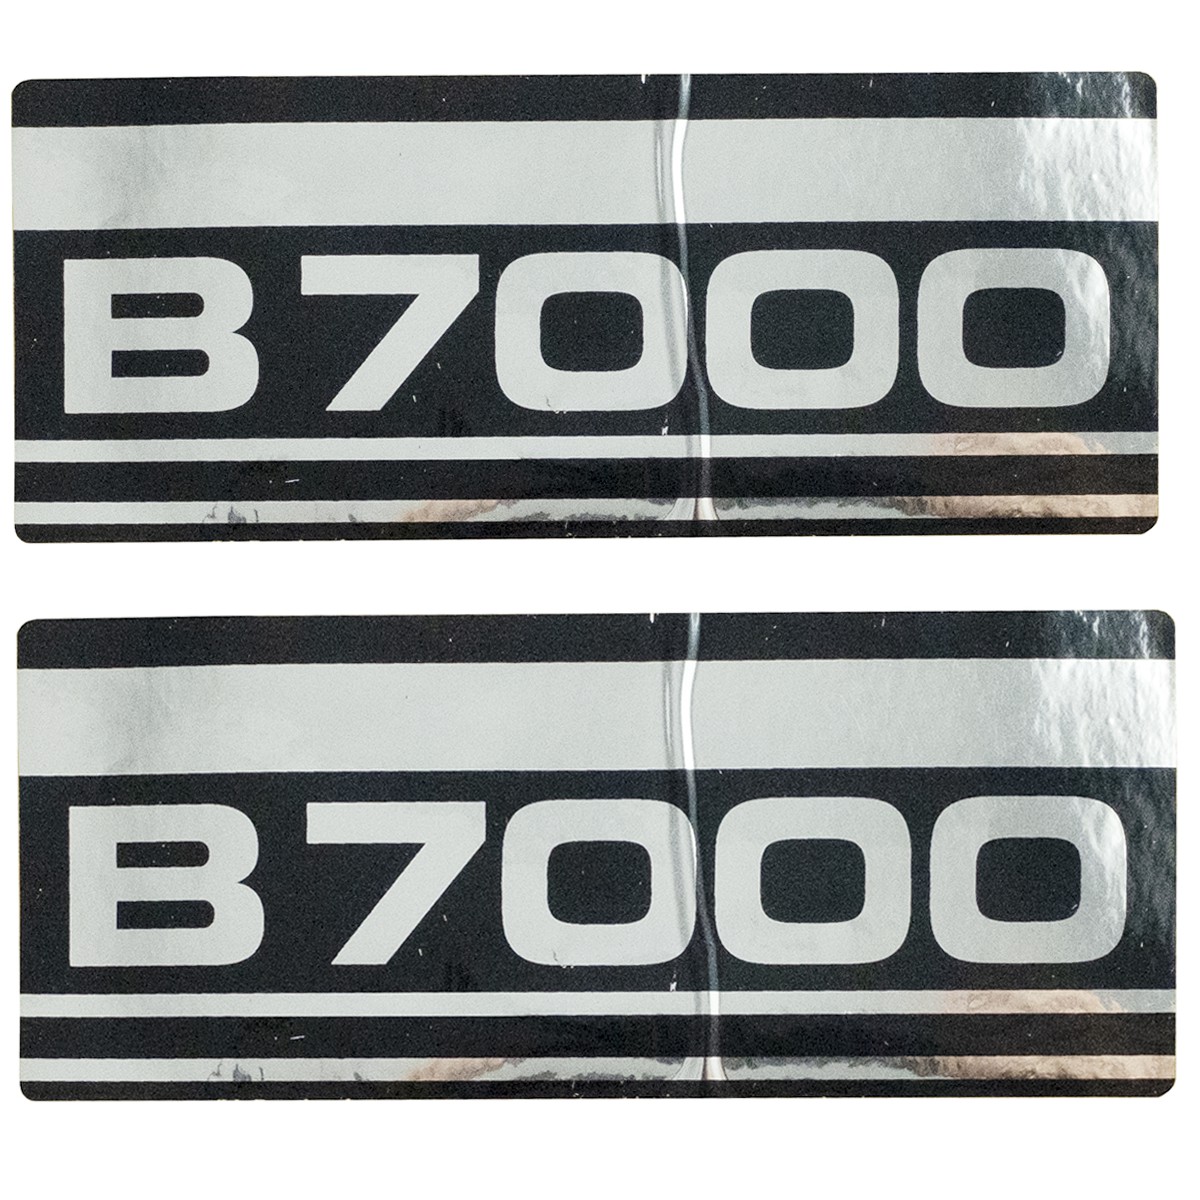 Kubota B7000 Aufkleber